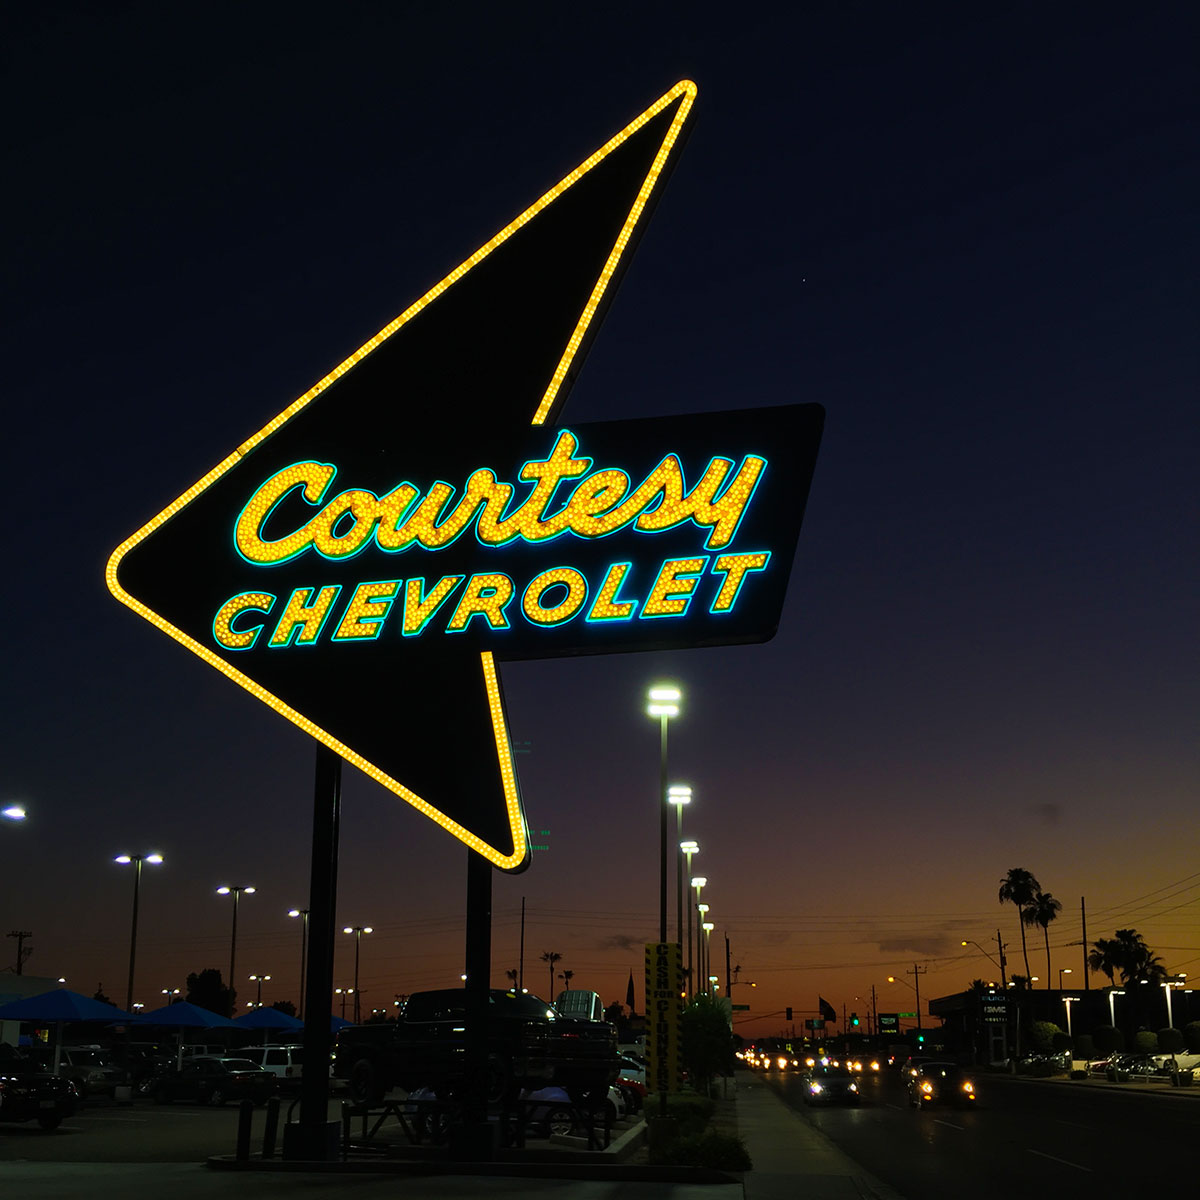 Courtesty Chevrolet in Phoenix Arizona LED sign